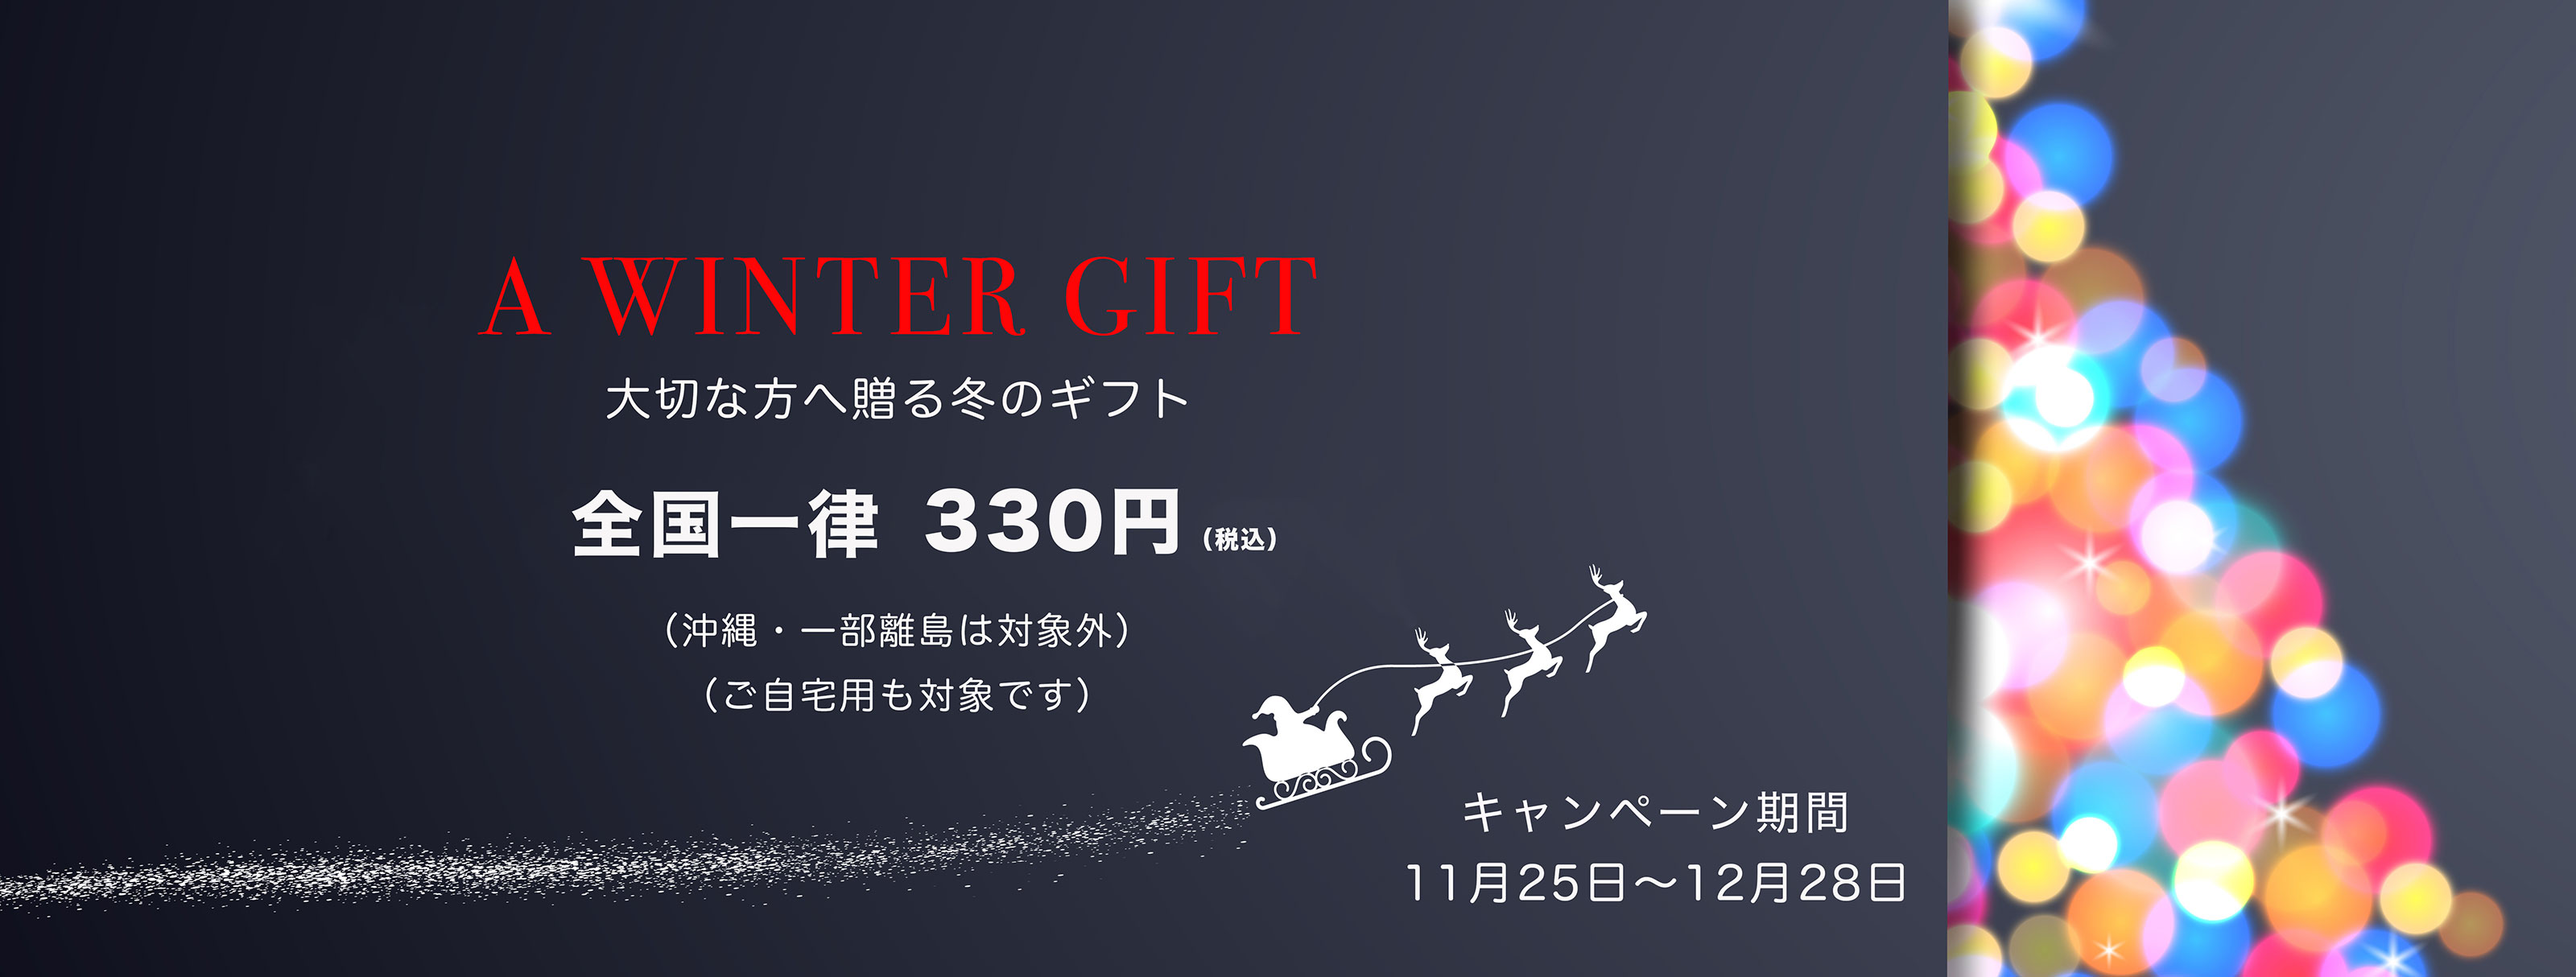 a winter gift 送料一律300円